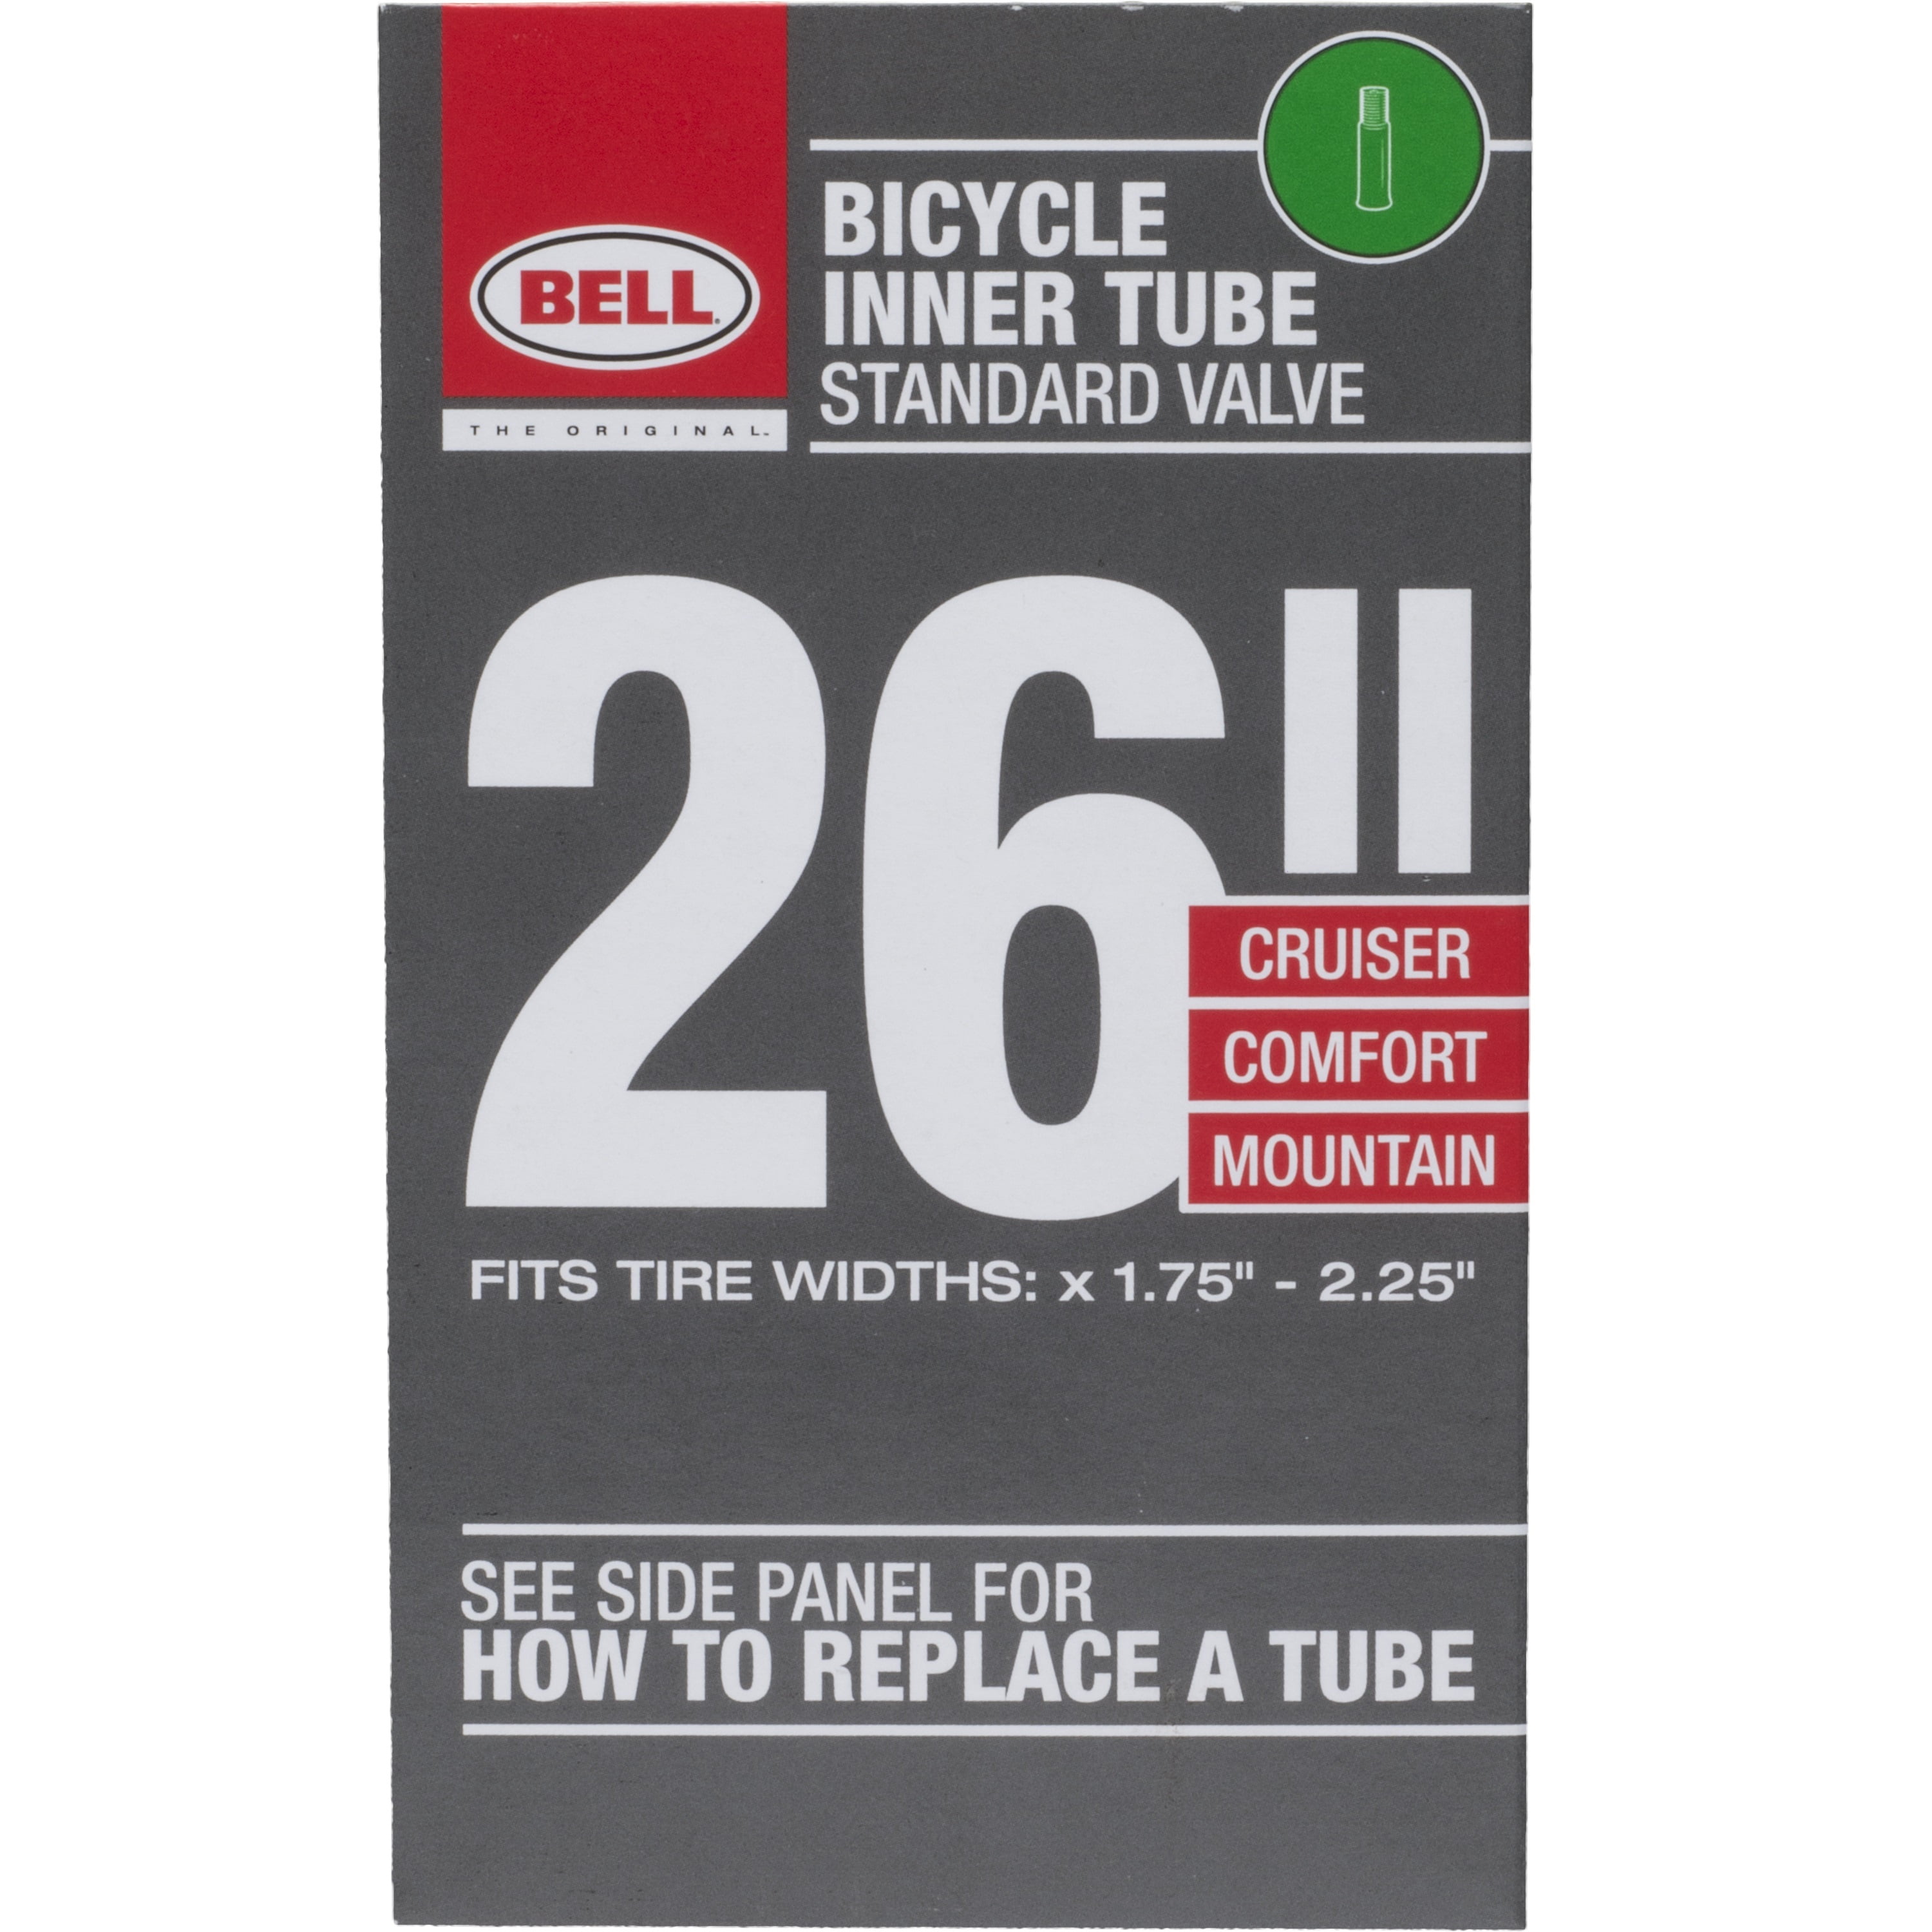 26*1.75/1.95 BICYCLE Tubes 26" inch Inner Bike Tube 